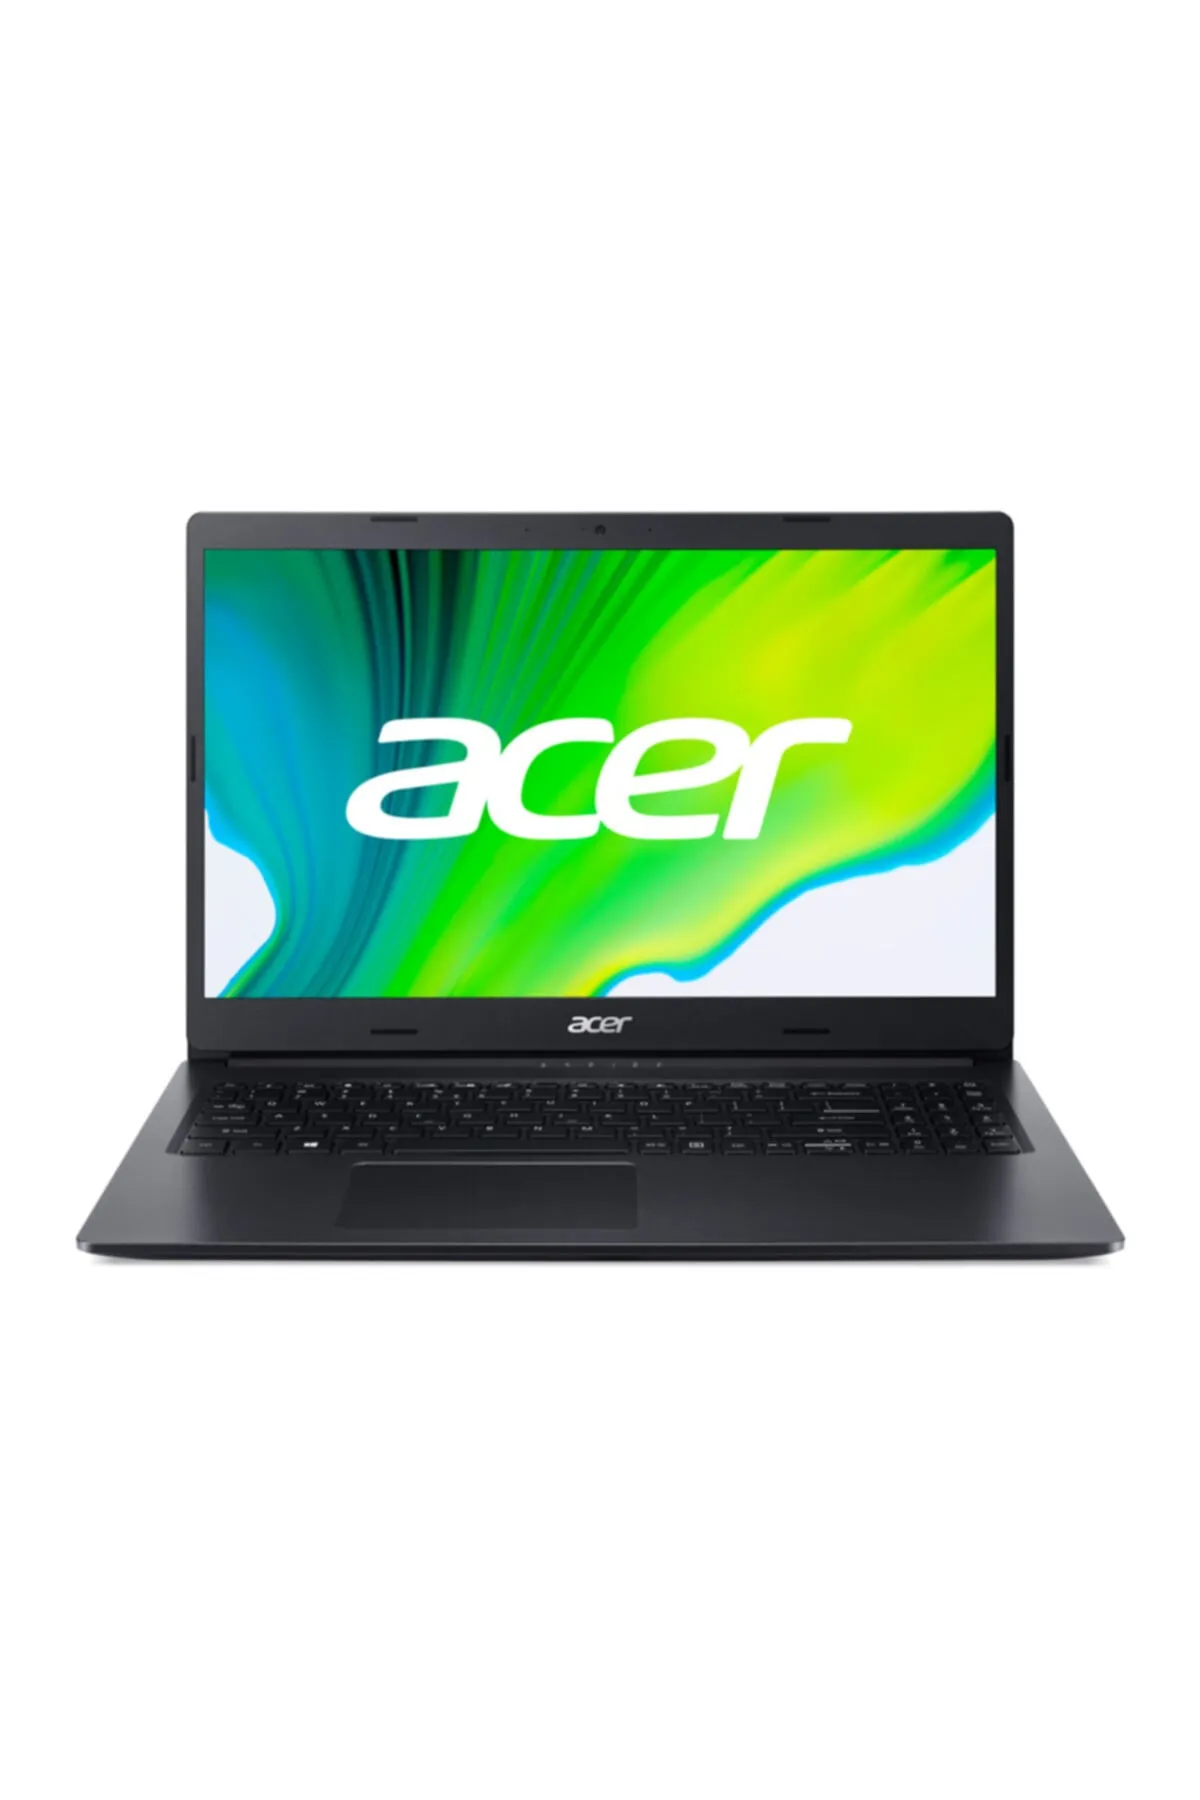 Acer Aspire 3 A315-32 Notebook